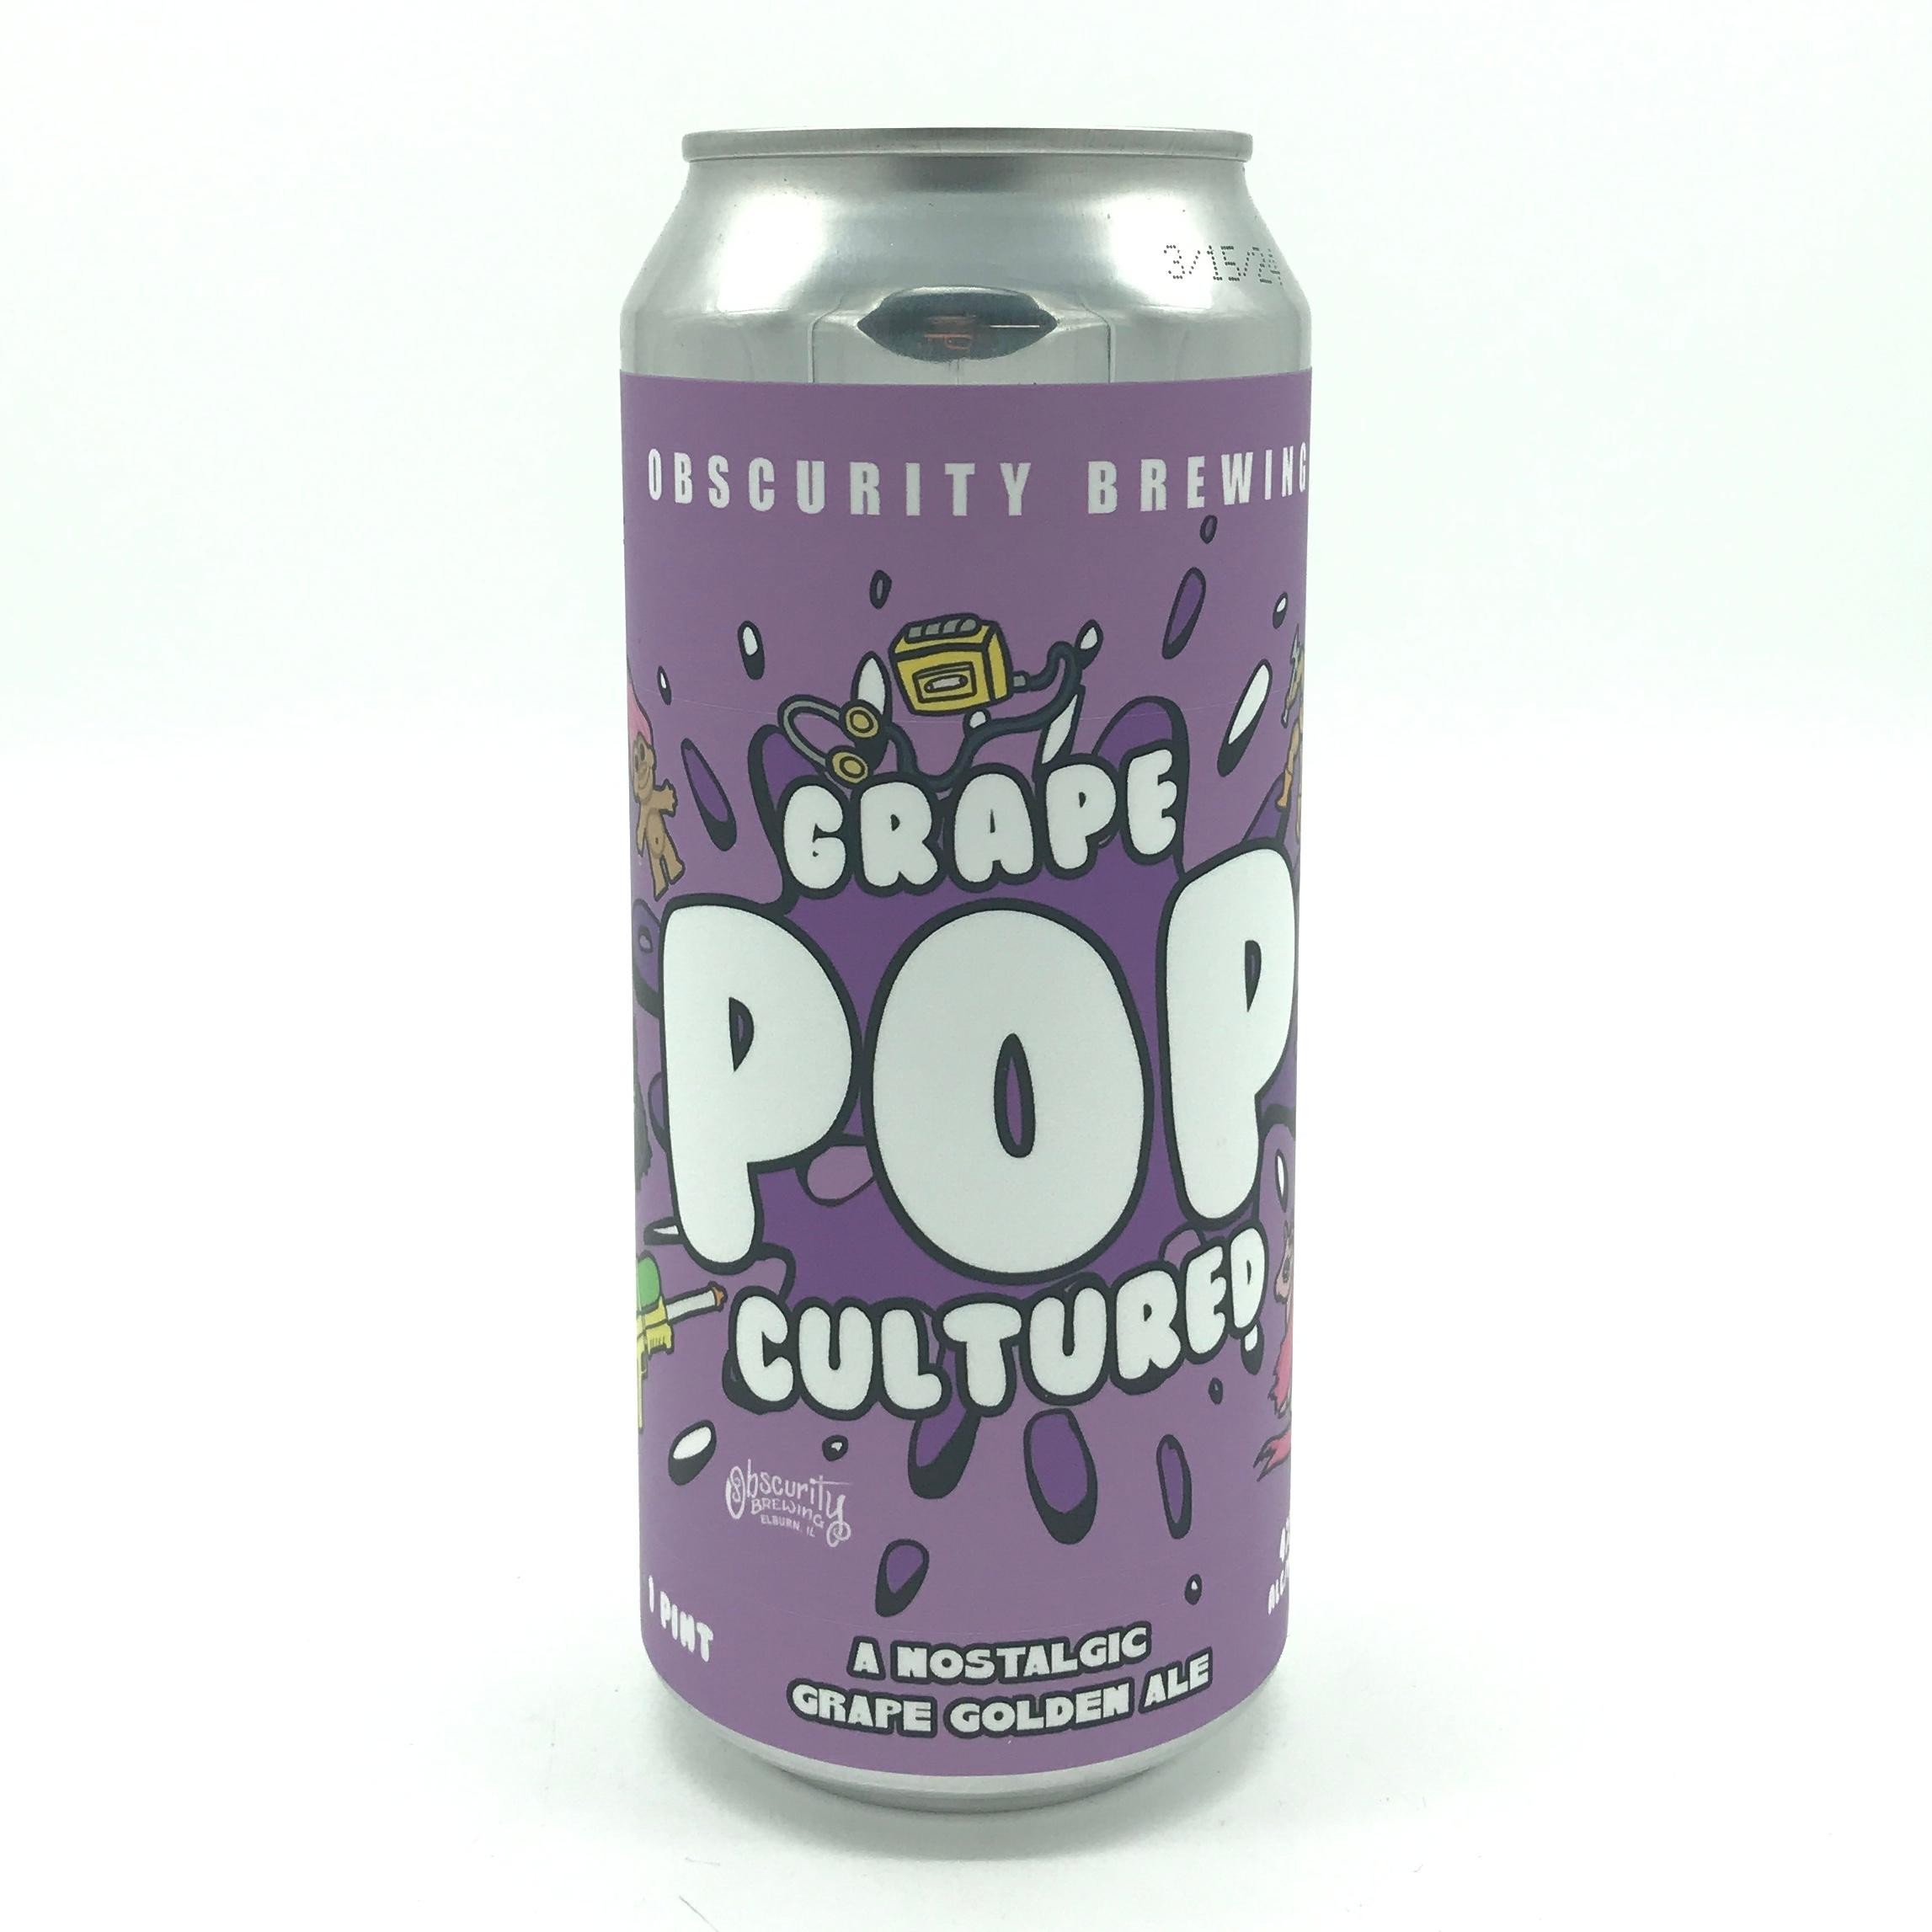 Obscurity - Grape Pop Cultured